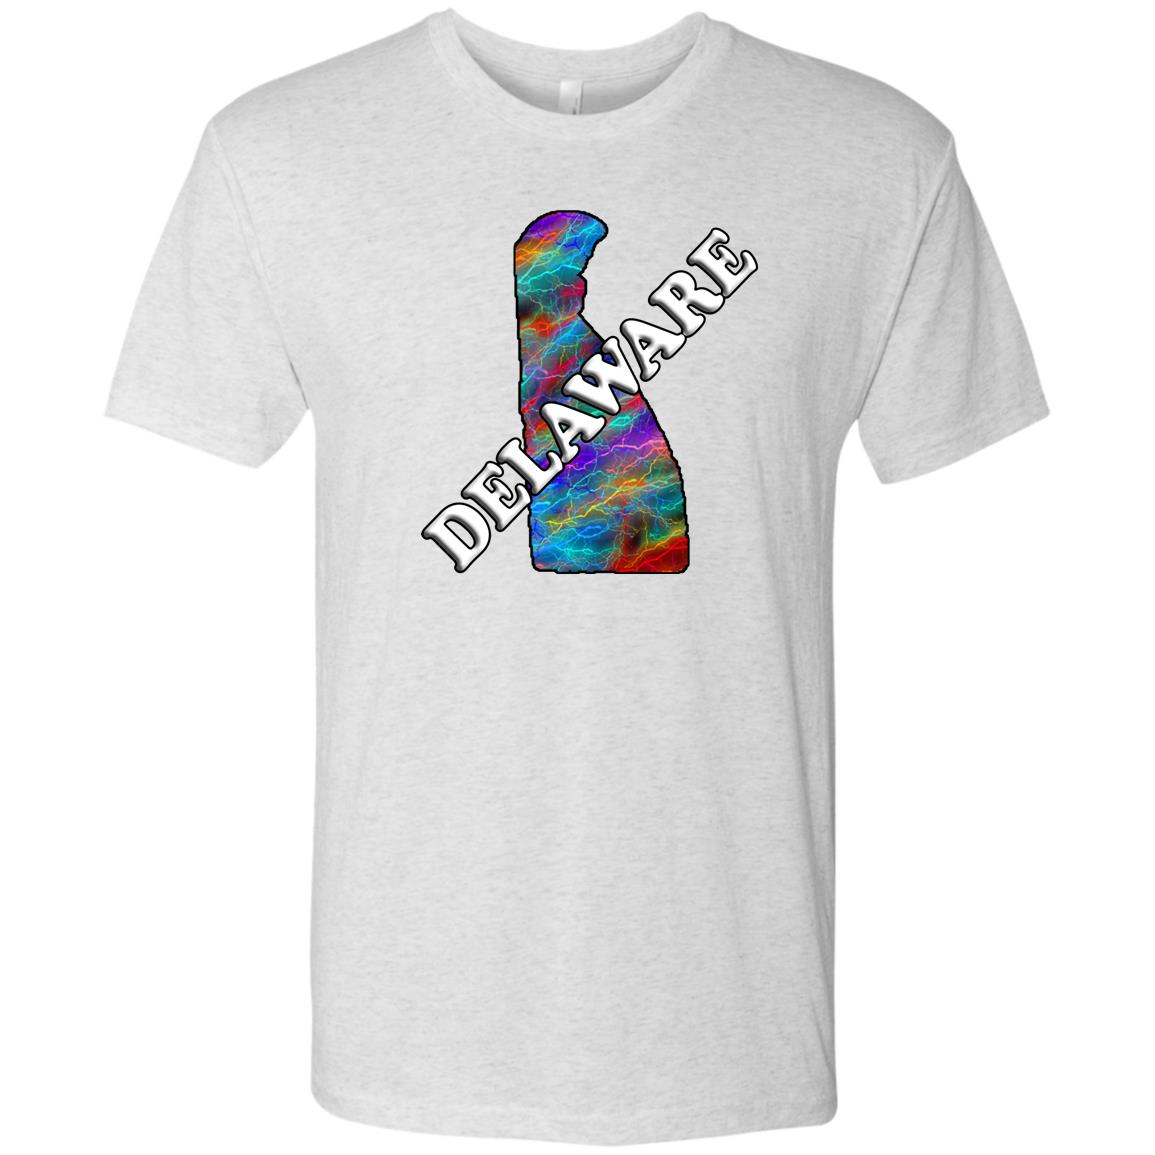 Delaware T-Shirt